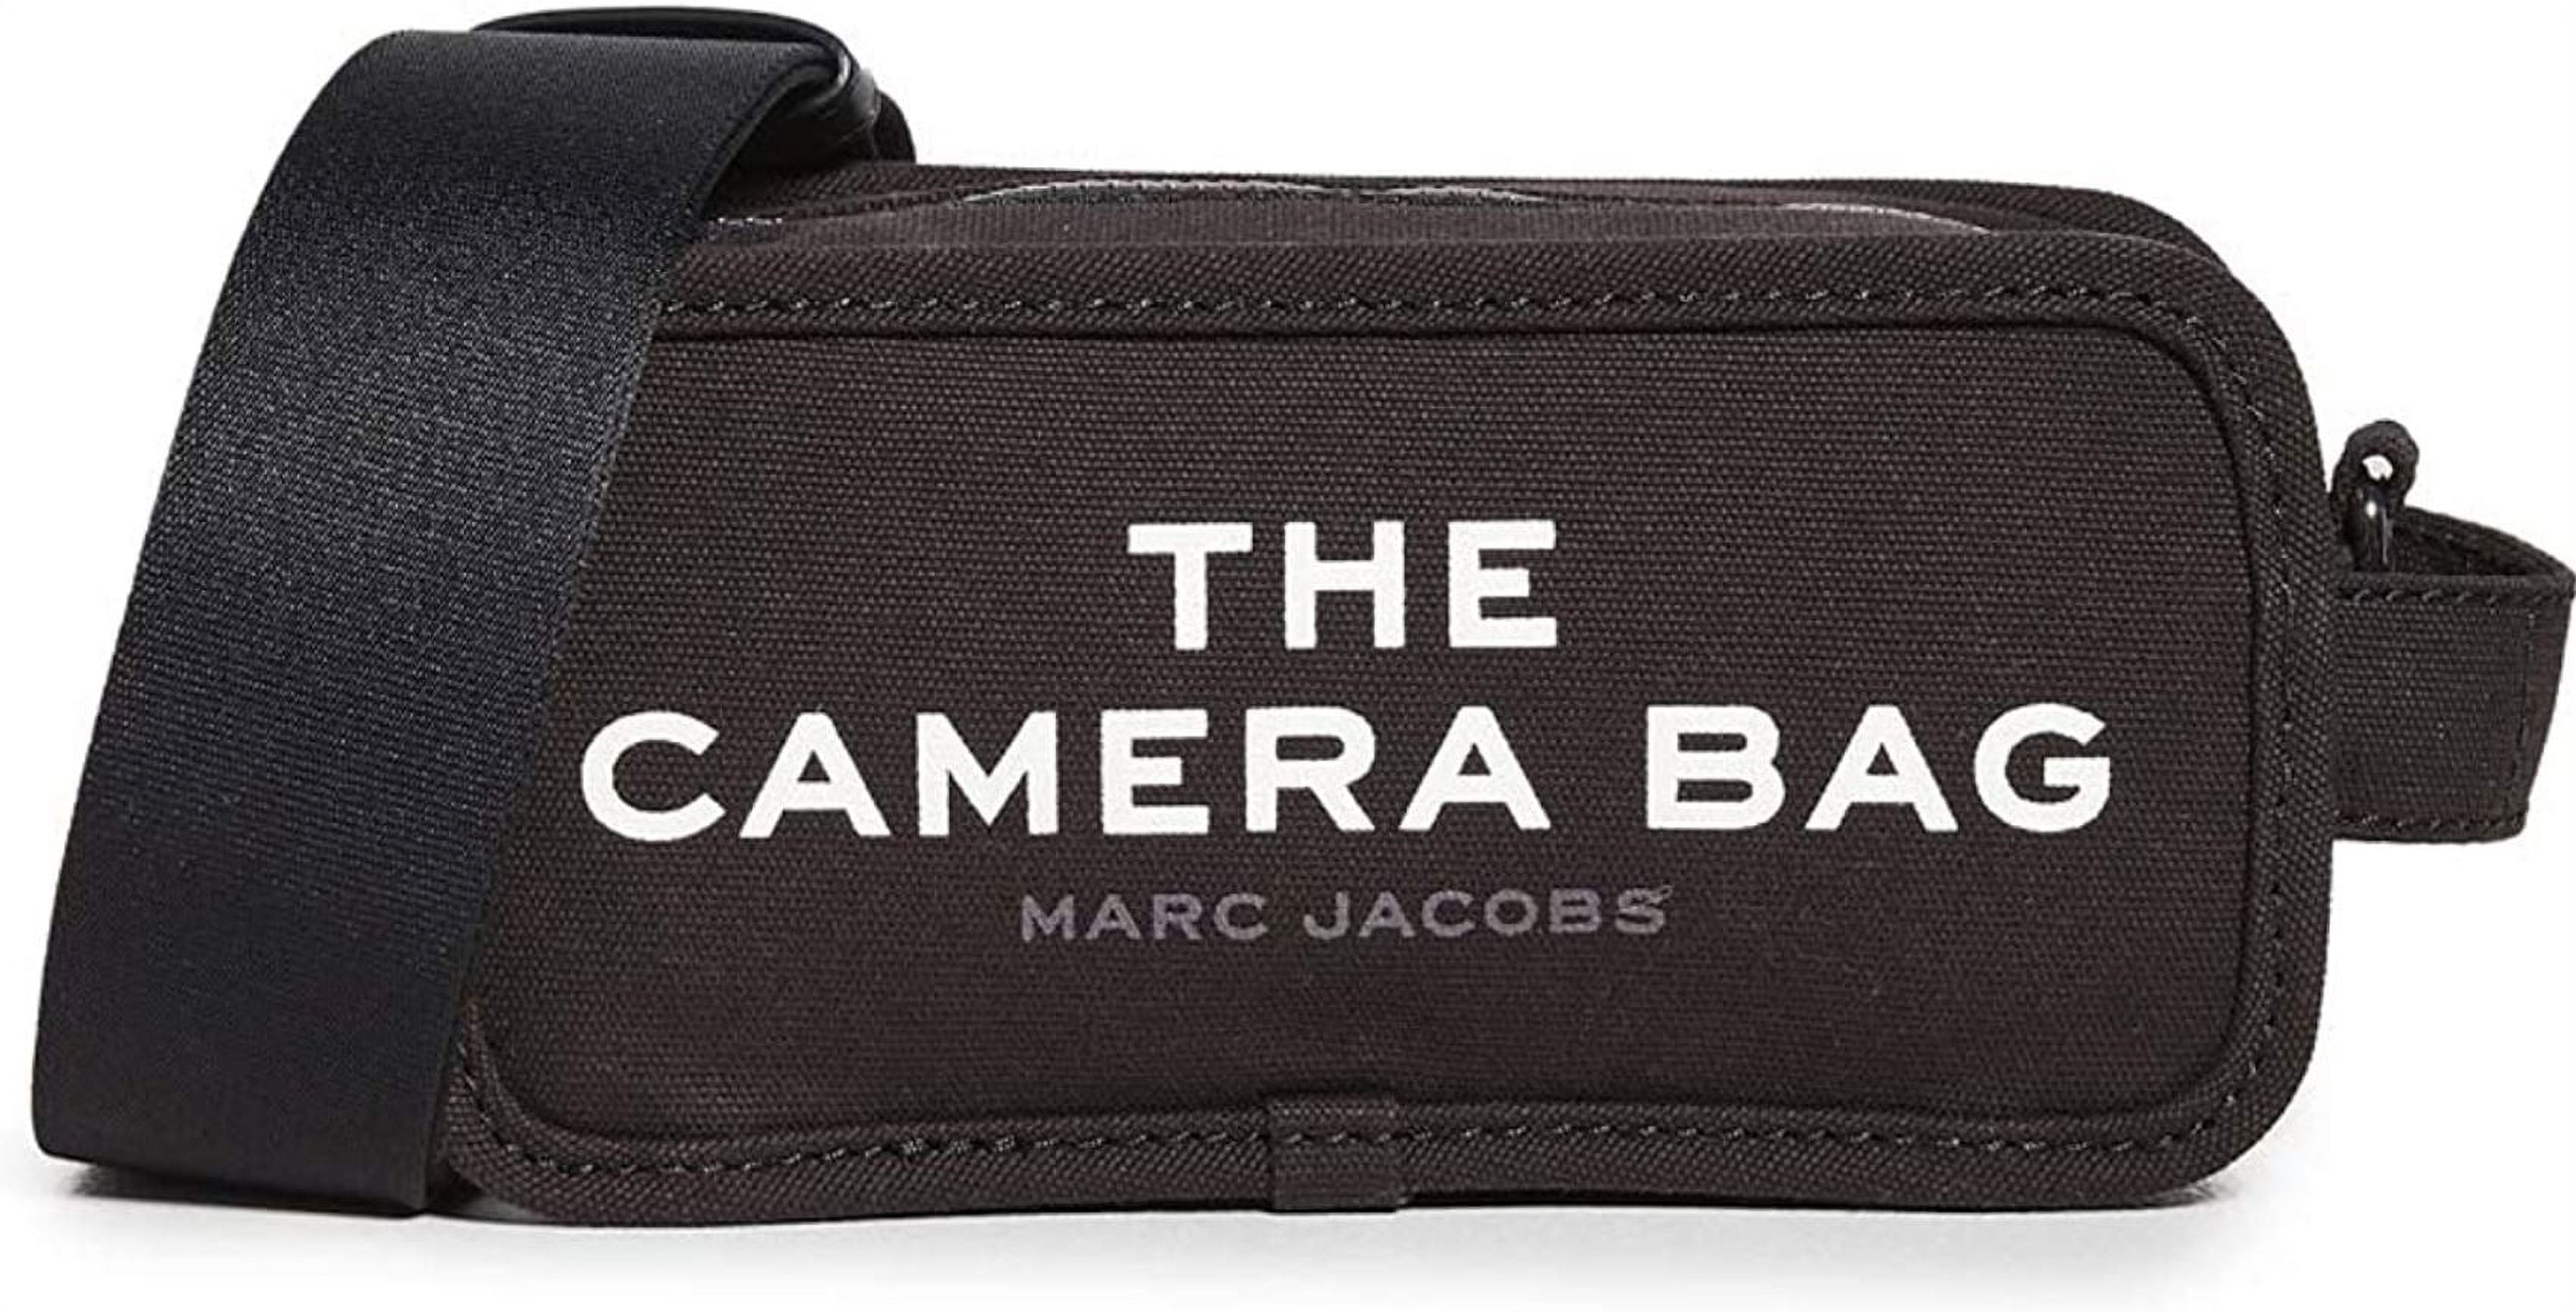 MARC JACOBS: The Camera Bag canvas bag - Black  Marc Jacobs crossbody bags  M0017040 online at